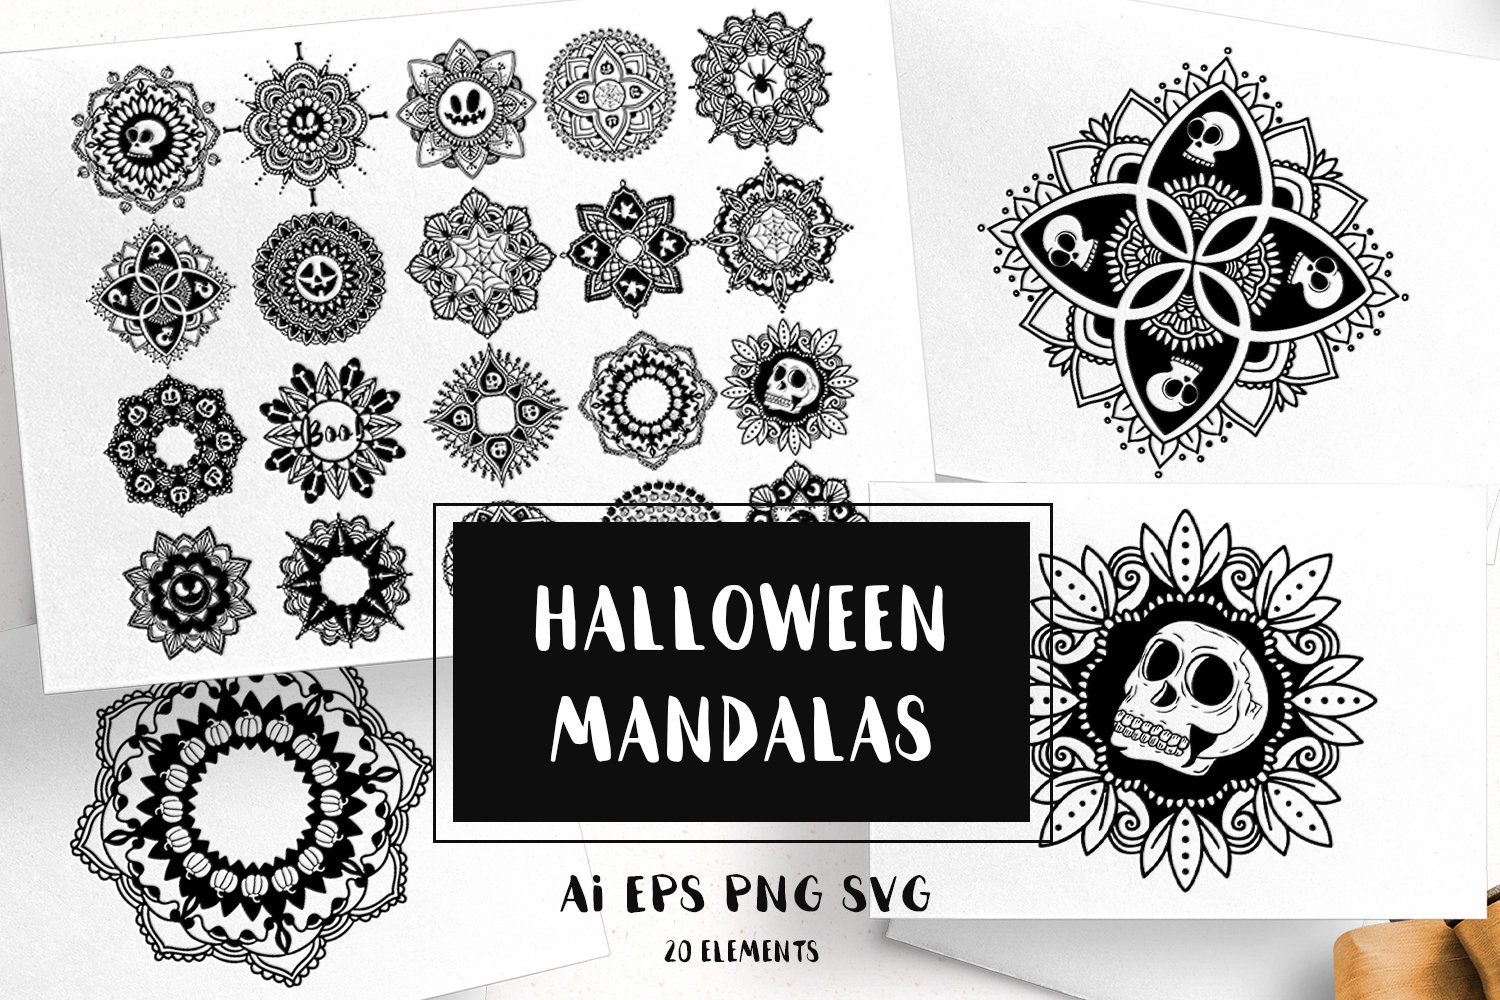 Download Halloween Mandala Svg Bundle Svgfile Co 0 99 Cent Svg Files Life Time Access